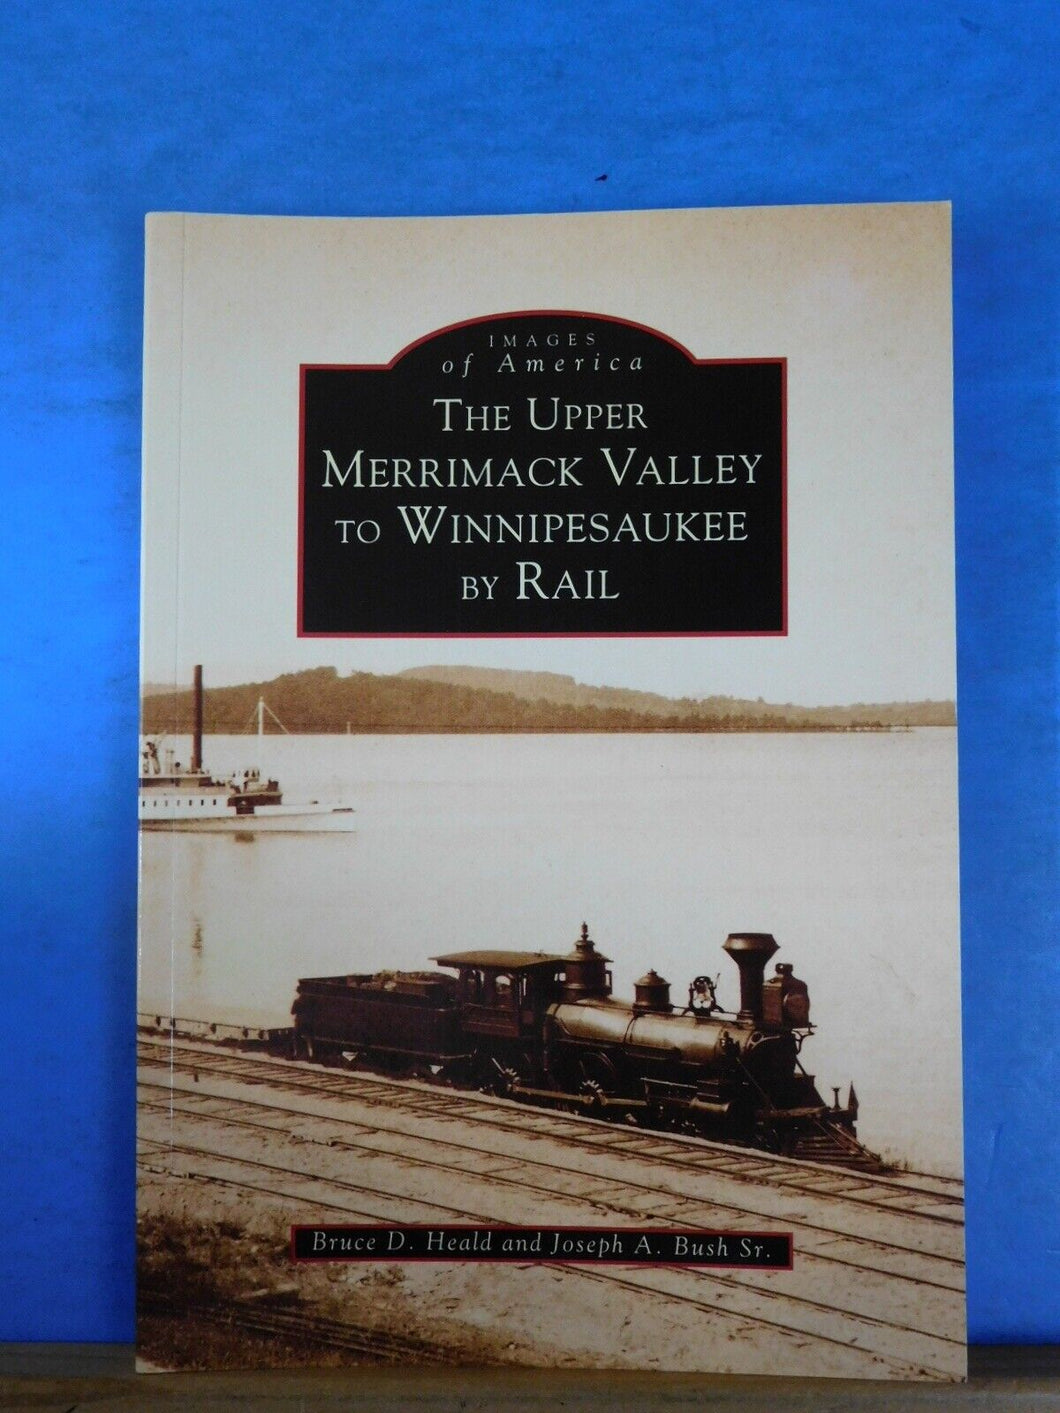 Images of America Upper Merrimack Valley to Winnipesaukee by Rail Heald & Bush